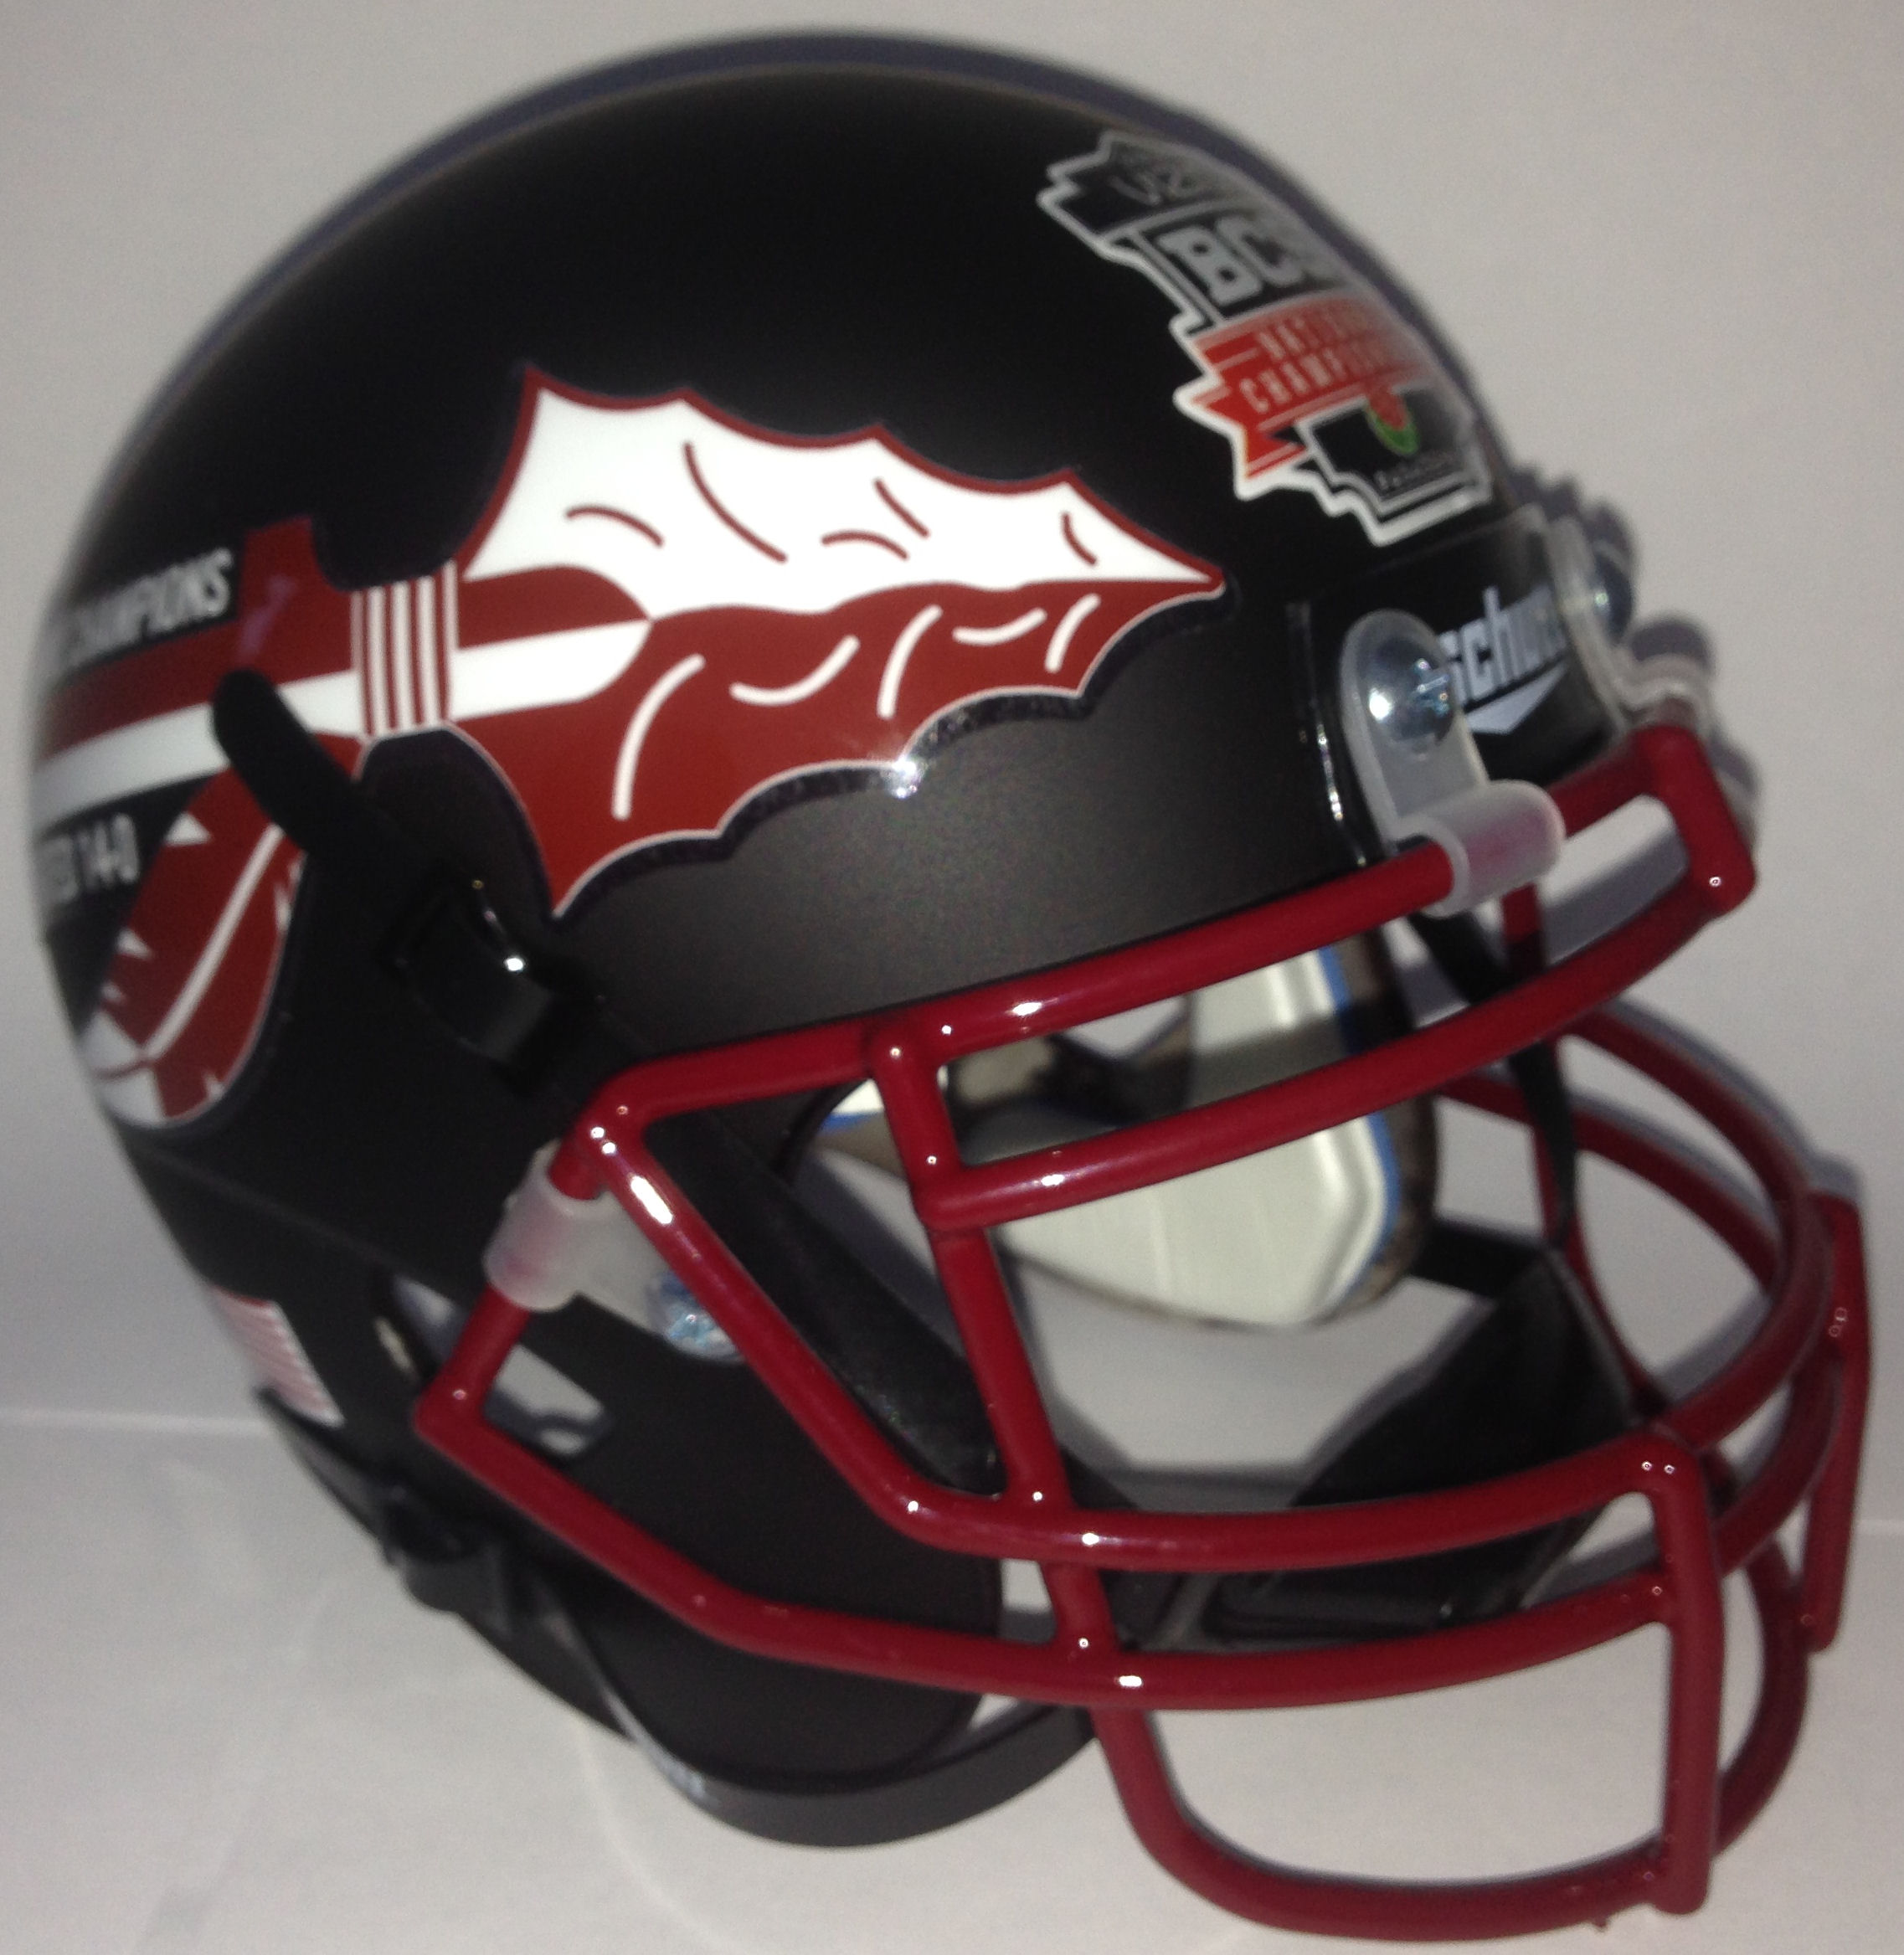 Florida State Seminoles 2013 BCS National Champions xp Replica Football Helmet Schutt <B>Black Matte Limited</B>